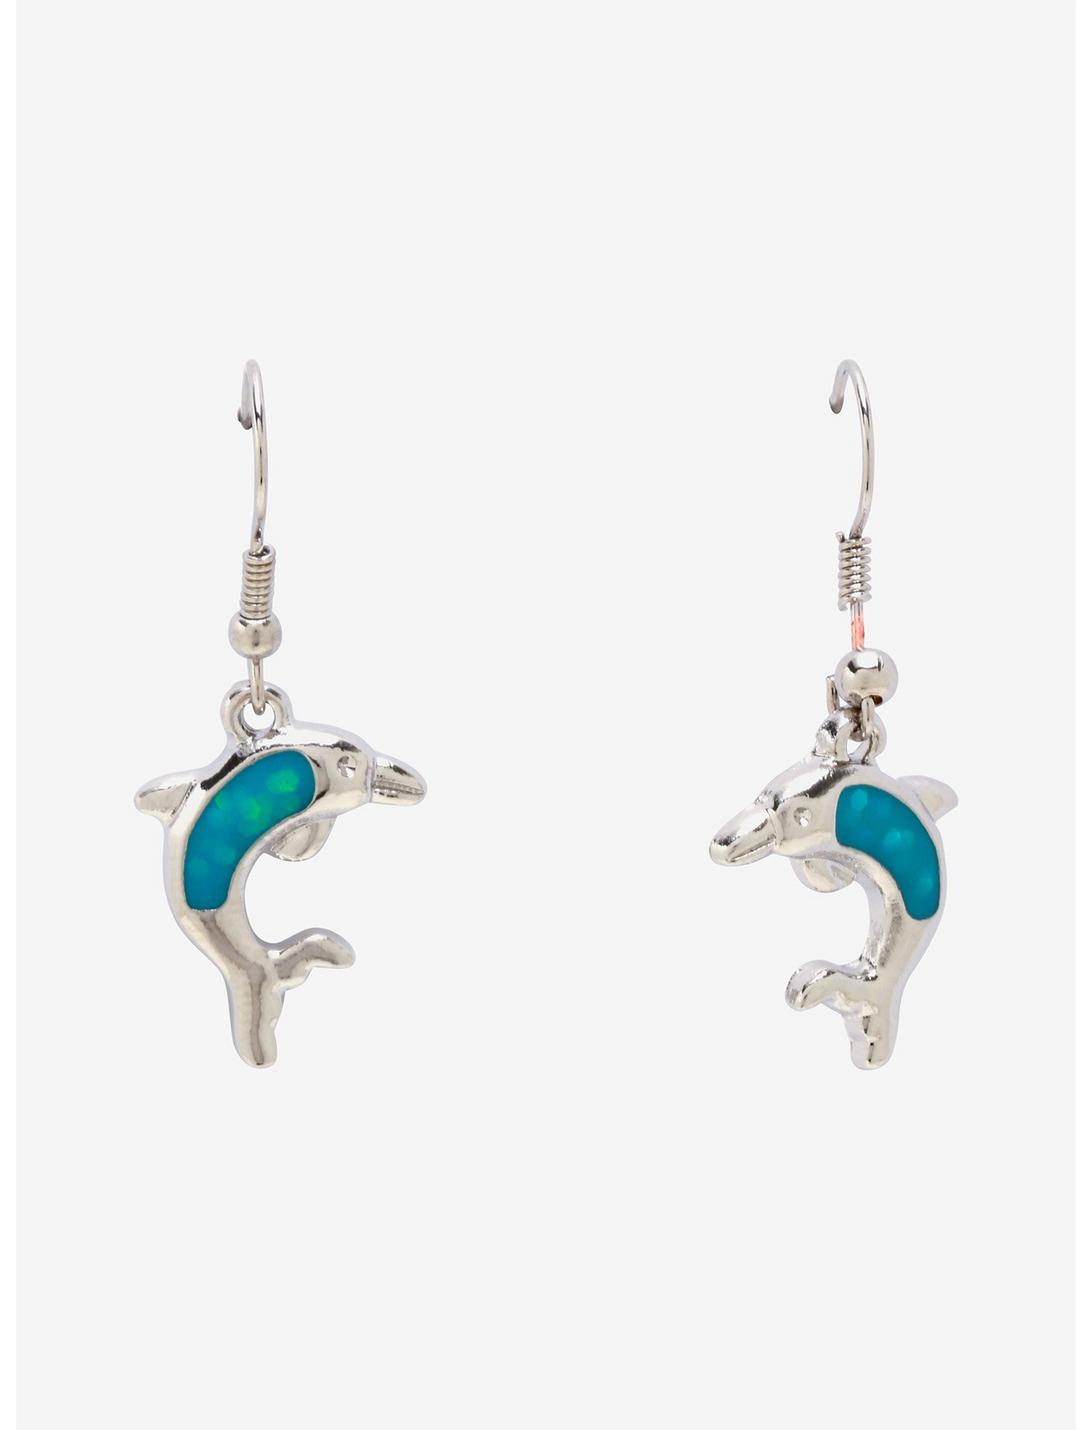 Dolphin Blue Opal Drop Earrings, , hi-res